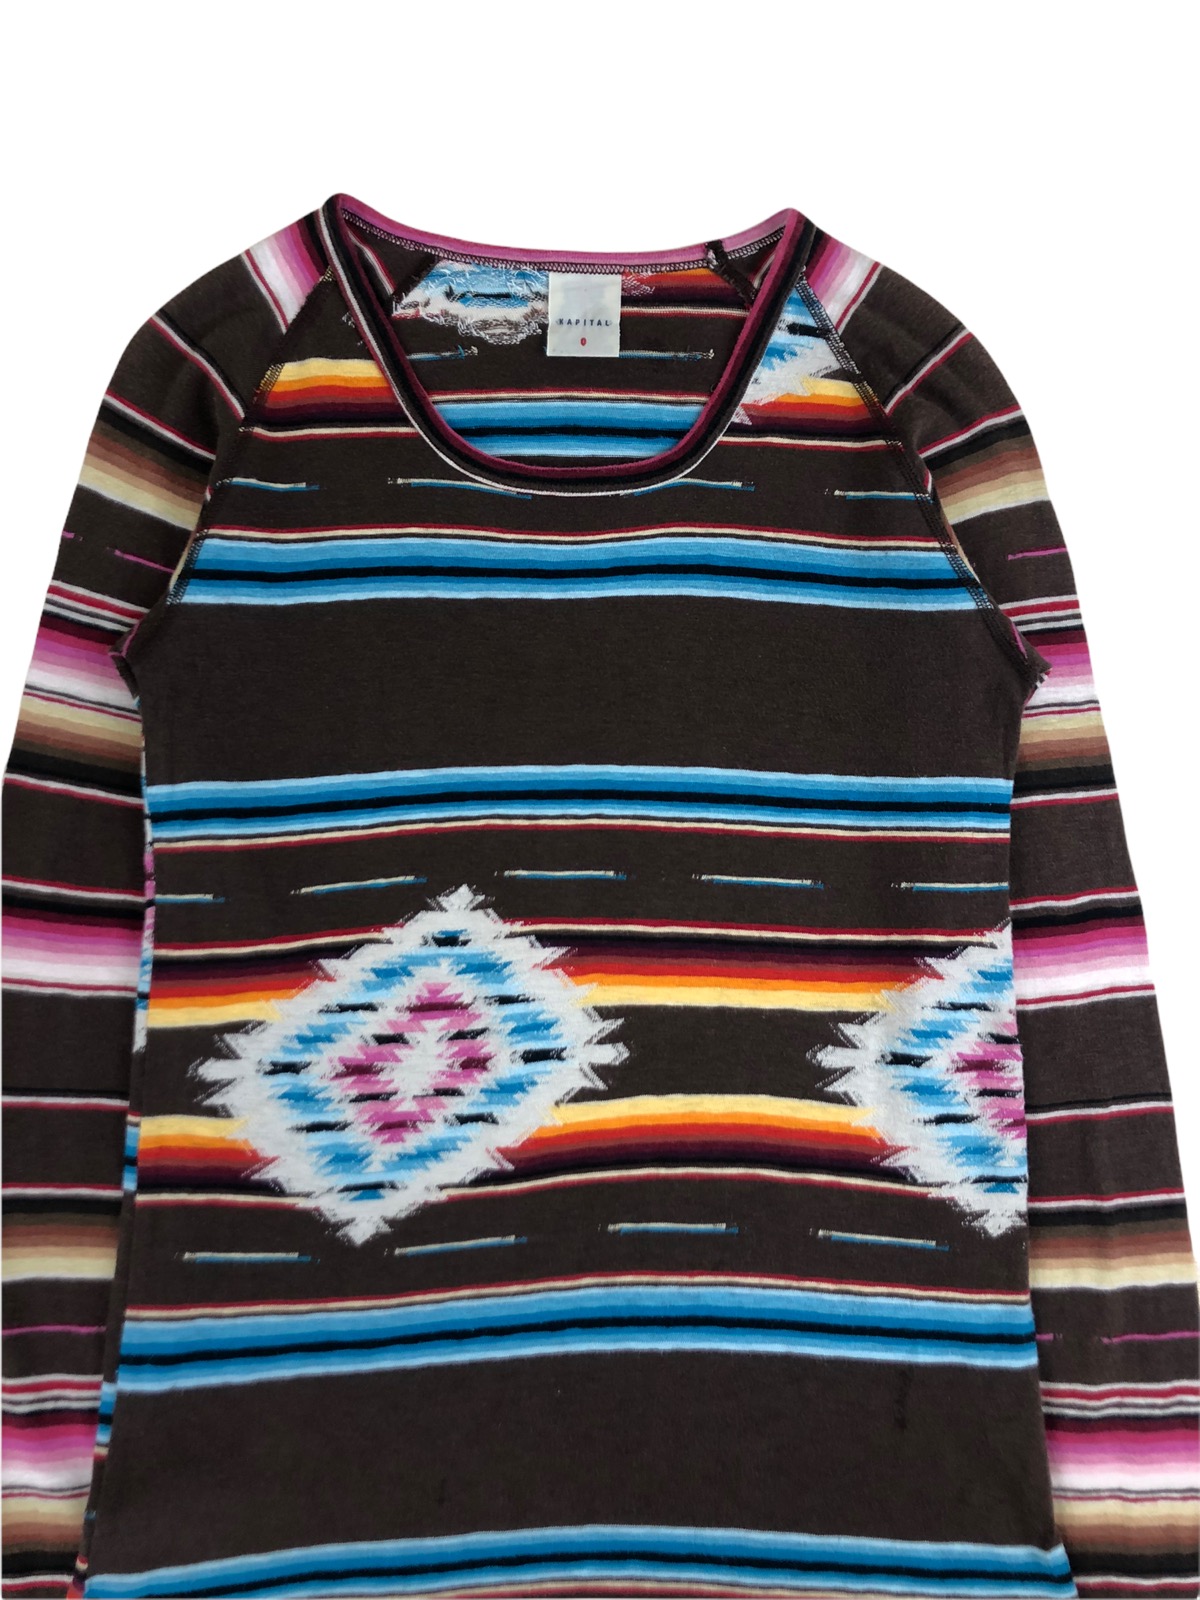 Vintage Kapital Aztec motif Cotton Knit Tshirt - 4